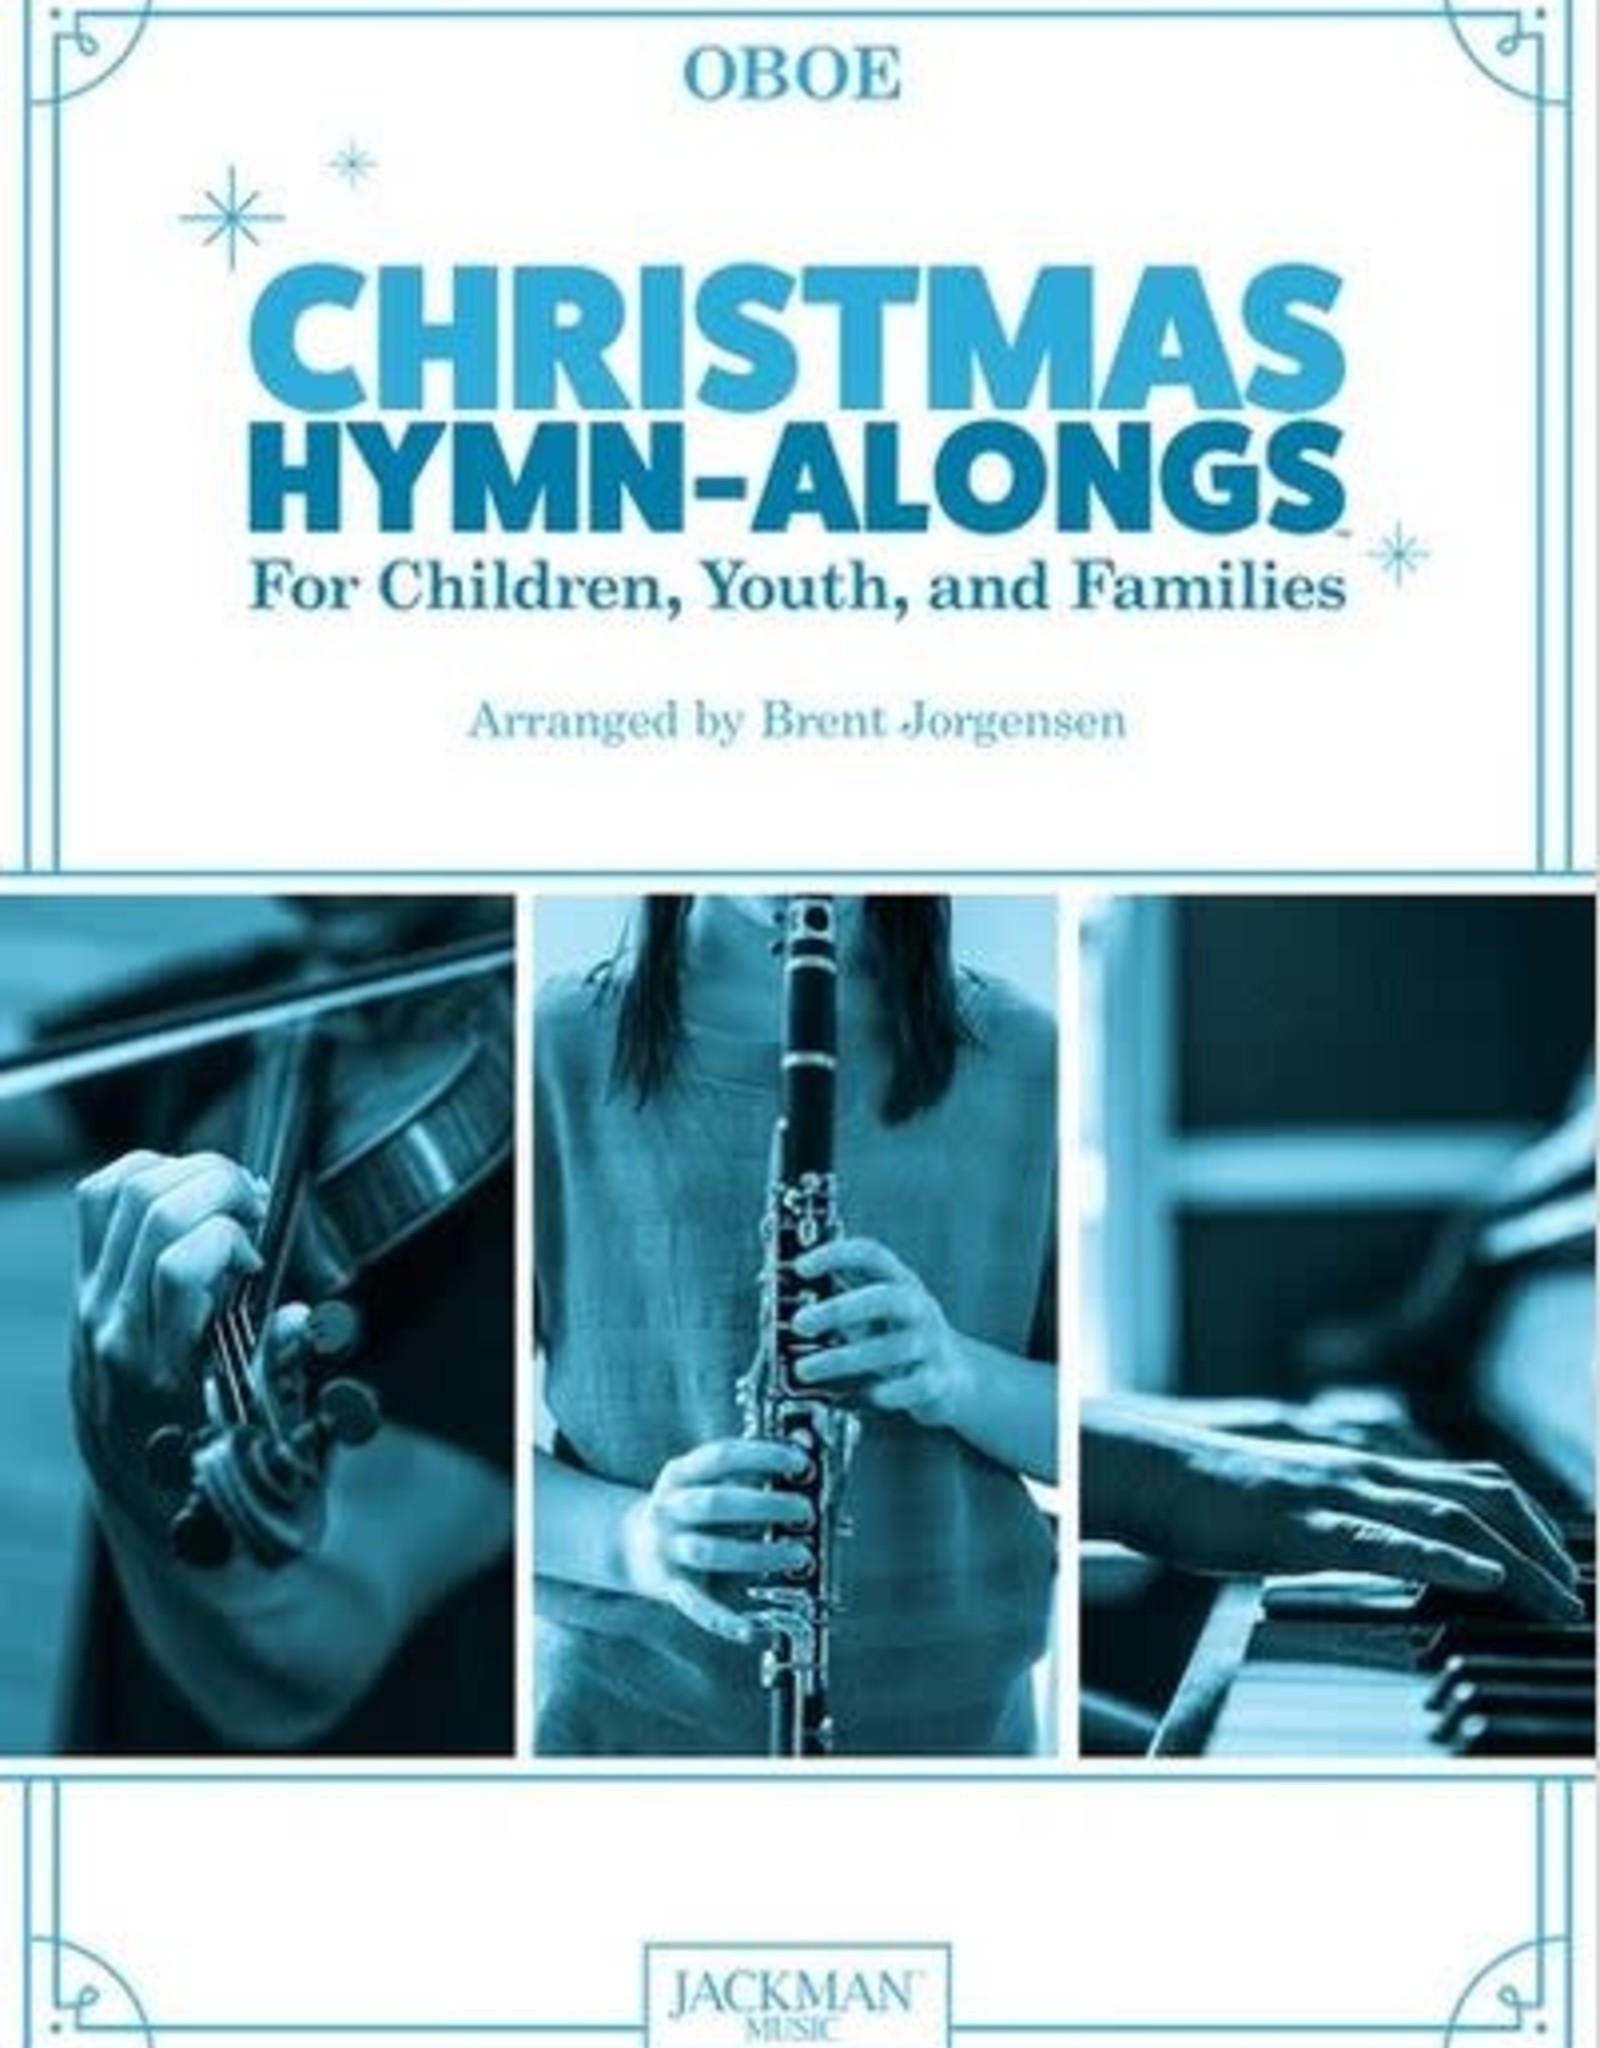 Jackman Music Christmas Hymn-Alongs - arr. Brent Jorgensen - Oboe